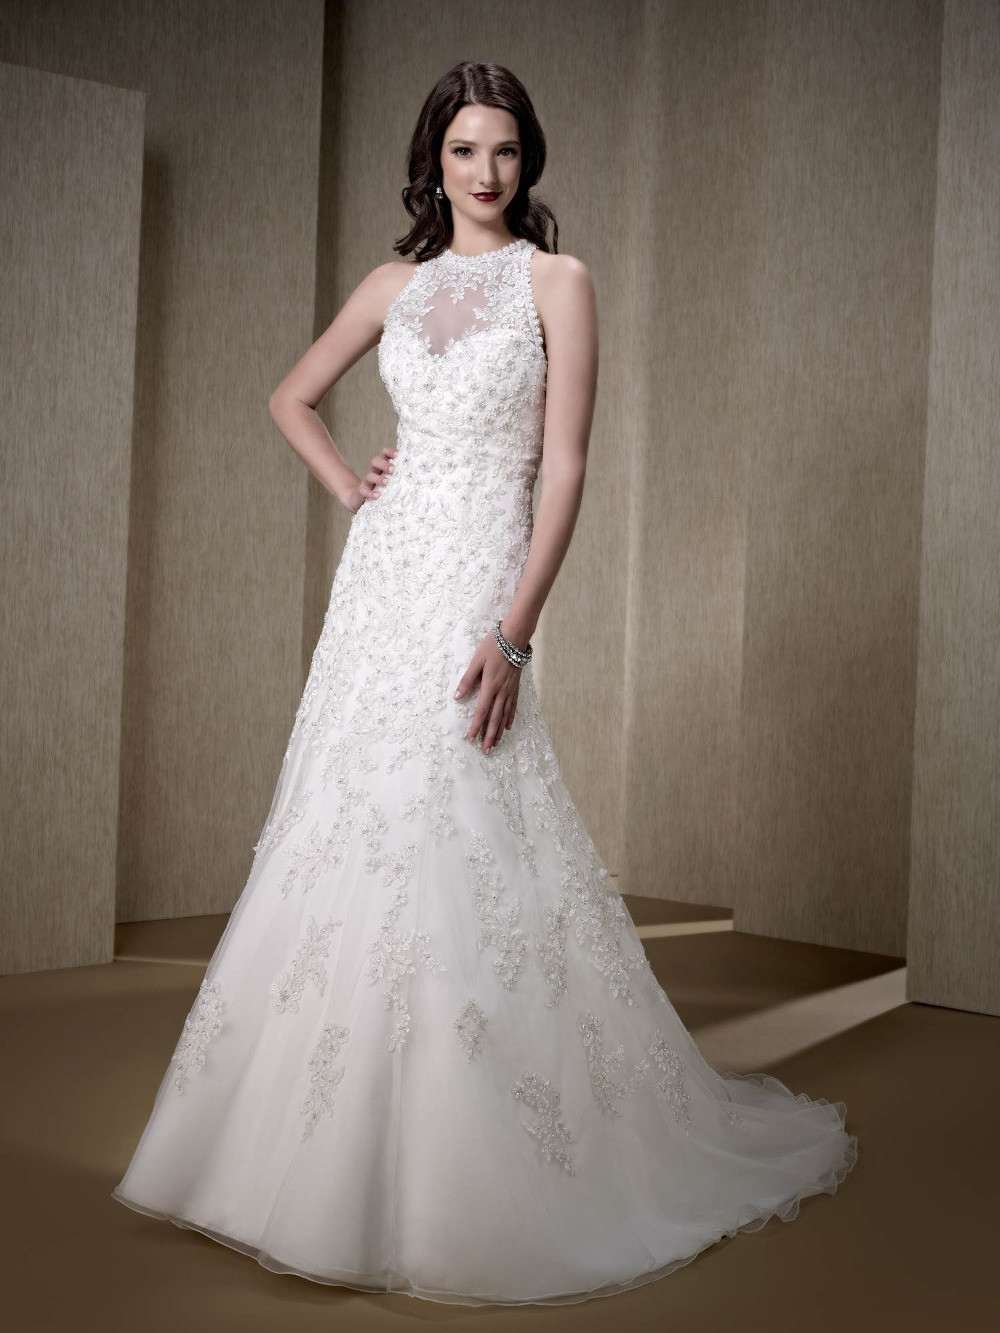 See Through Corset Wedding Dress
 New Design See Through Corset Wedding Dresses Lace High